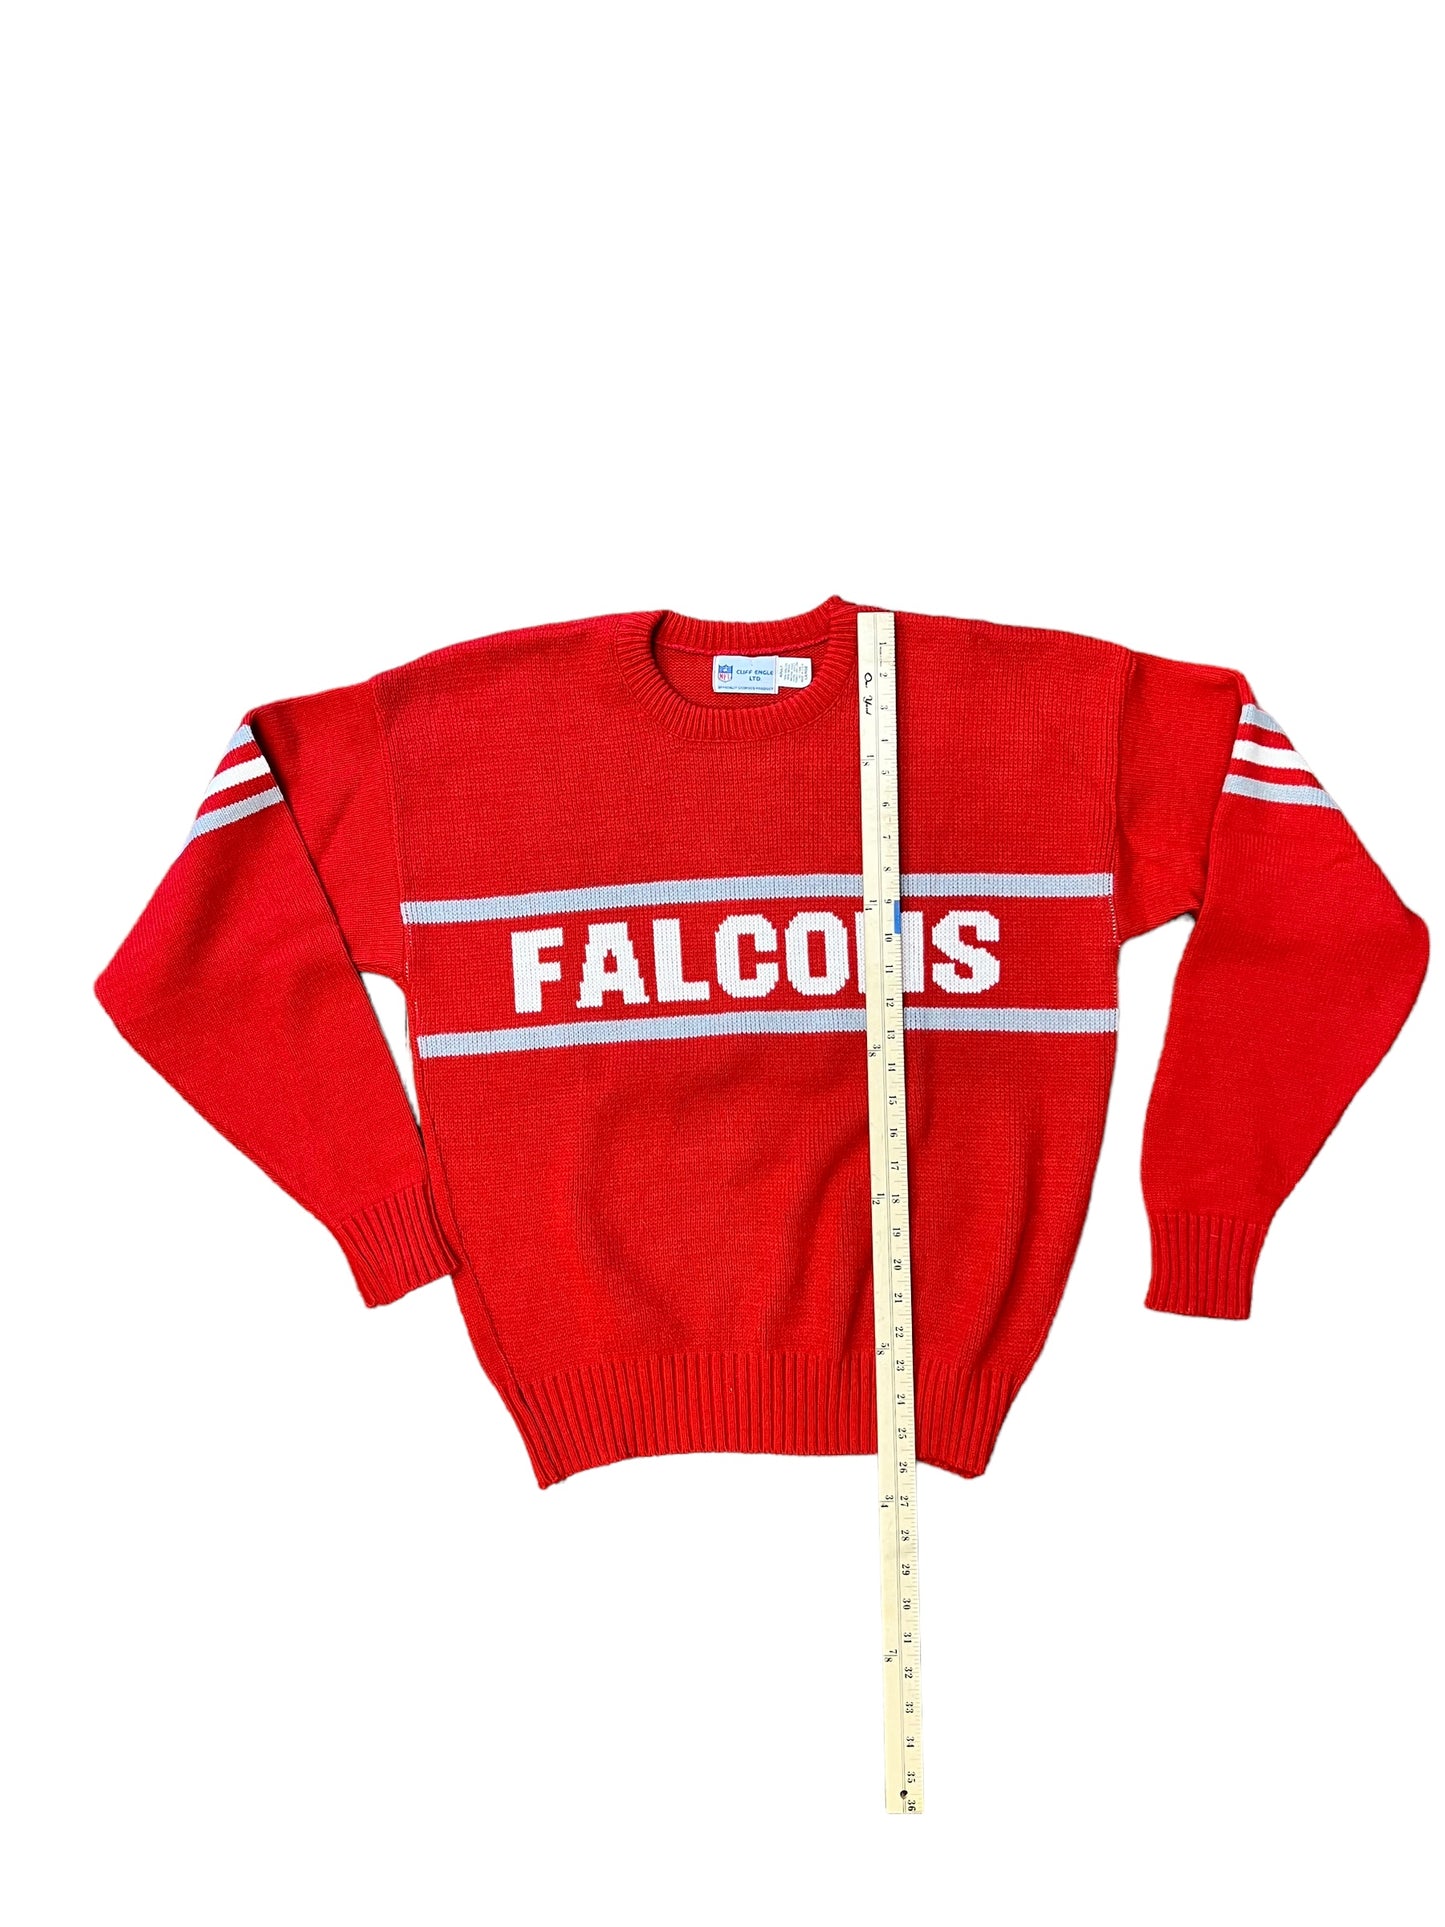 Vintage Atlanta Falcons Knit Sweater - Large